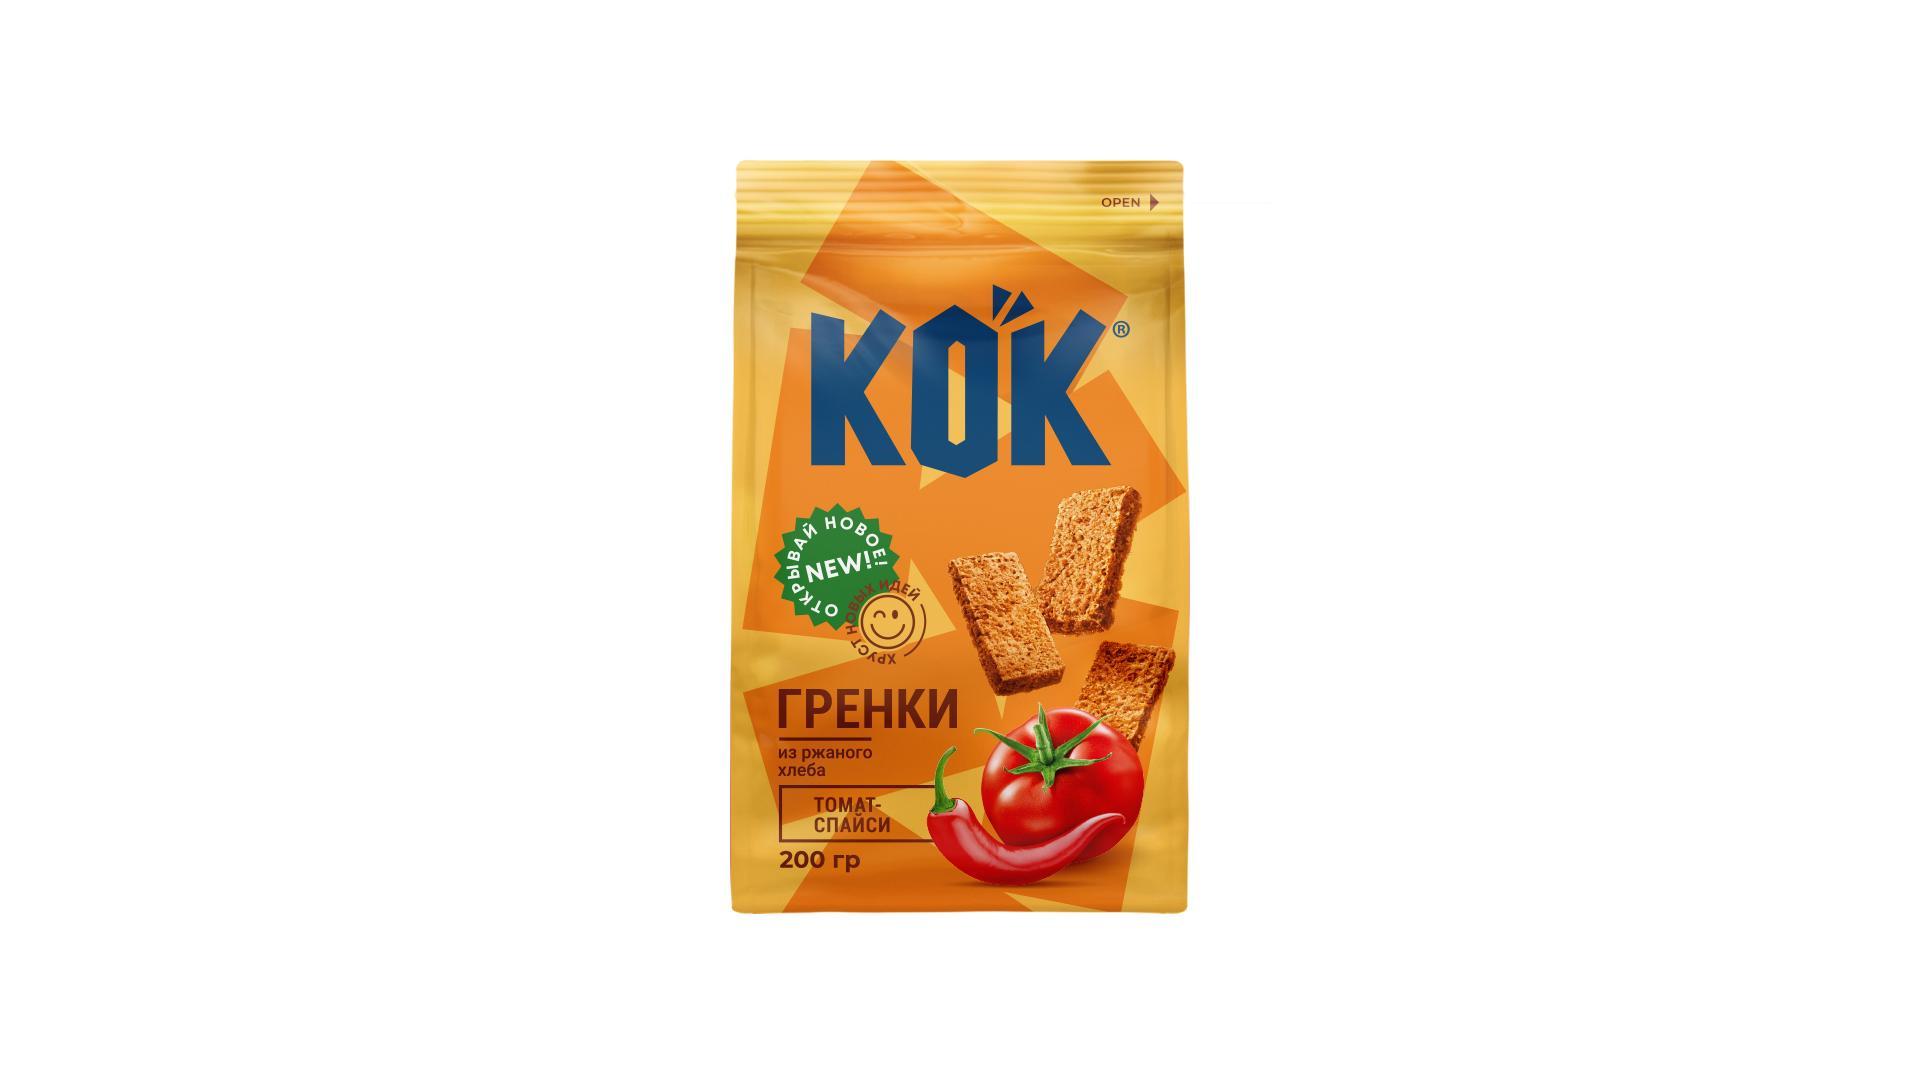 Гренки Kok из ржаного хлеба со вкусом томат-спайси 200 гр., флоу-пак